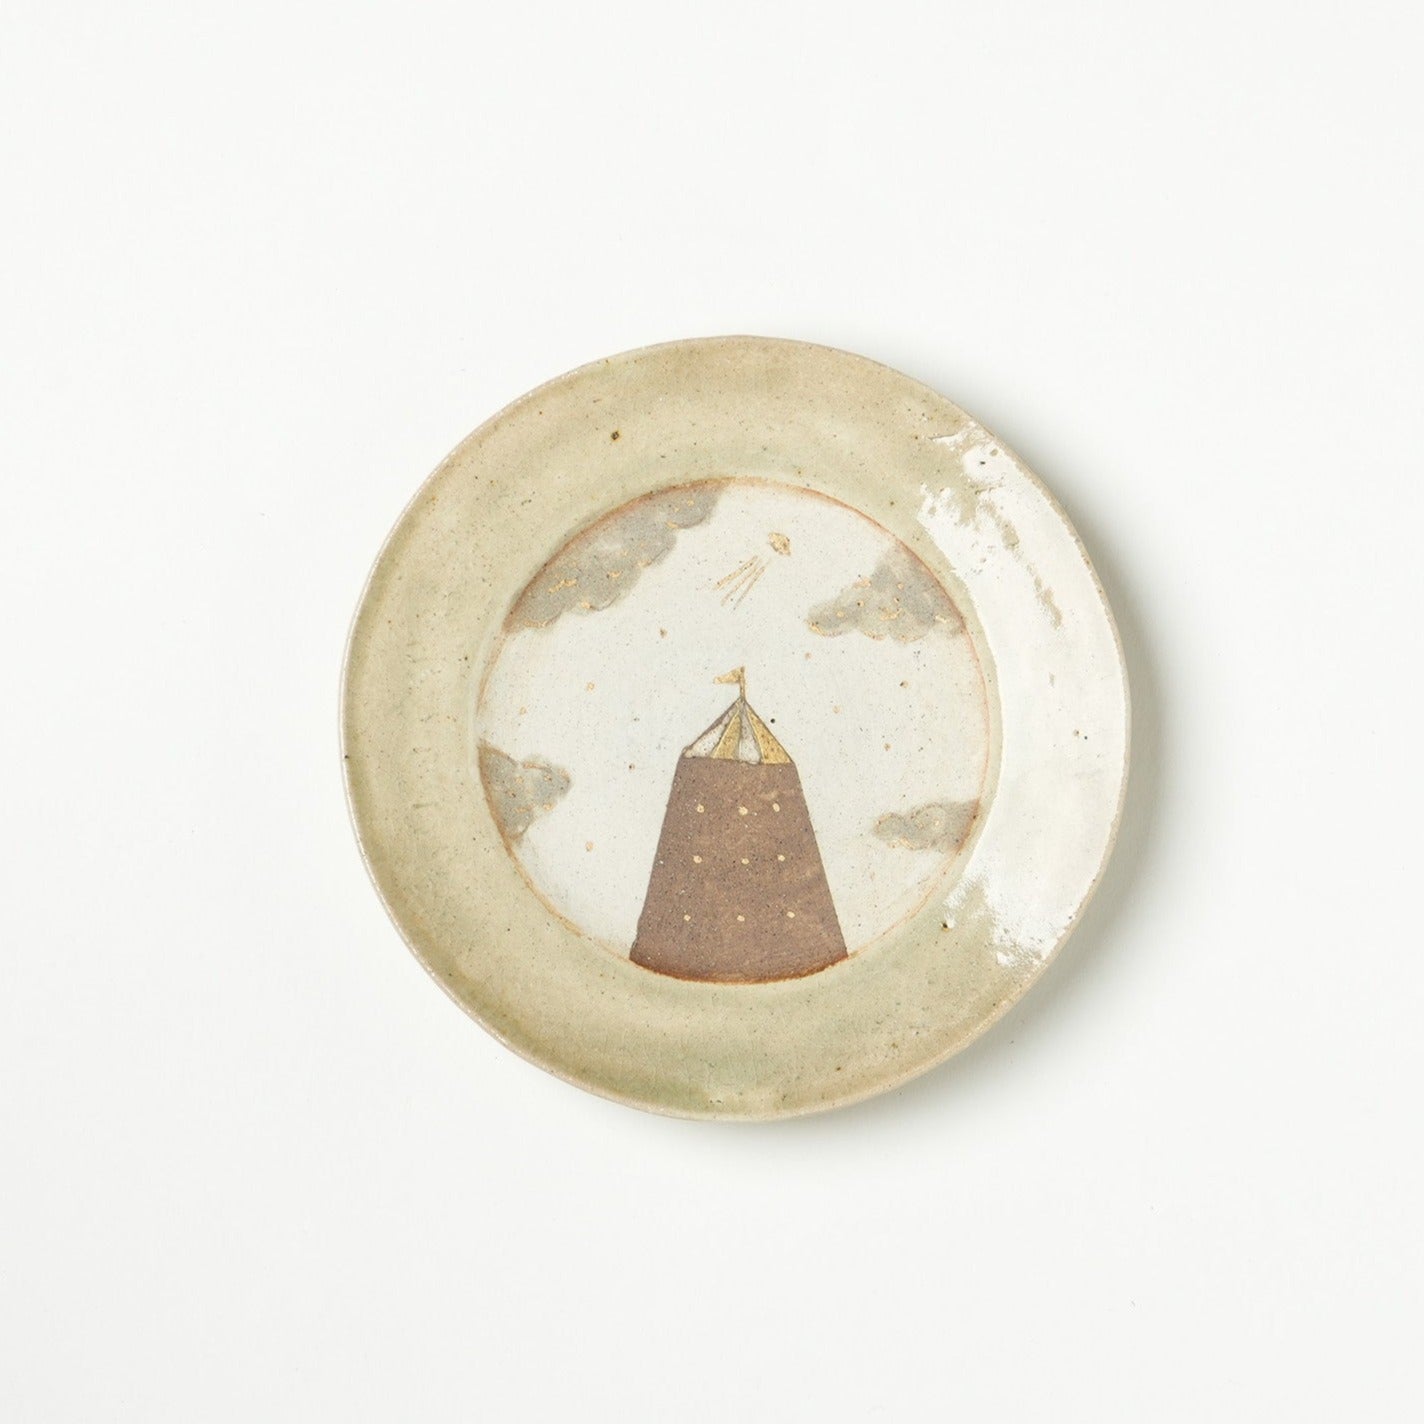 Izumi Sakai Small Plate with gold